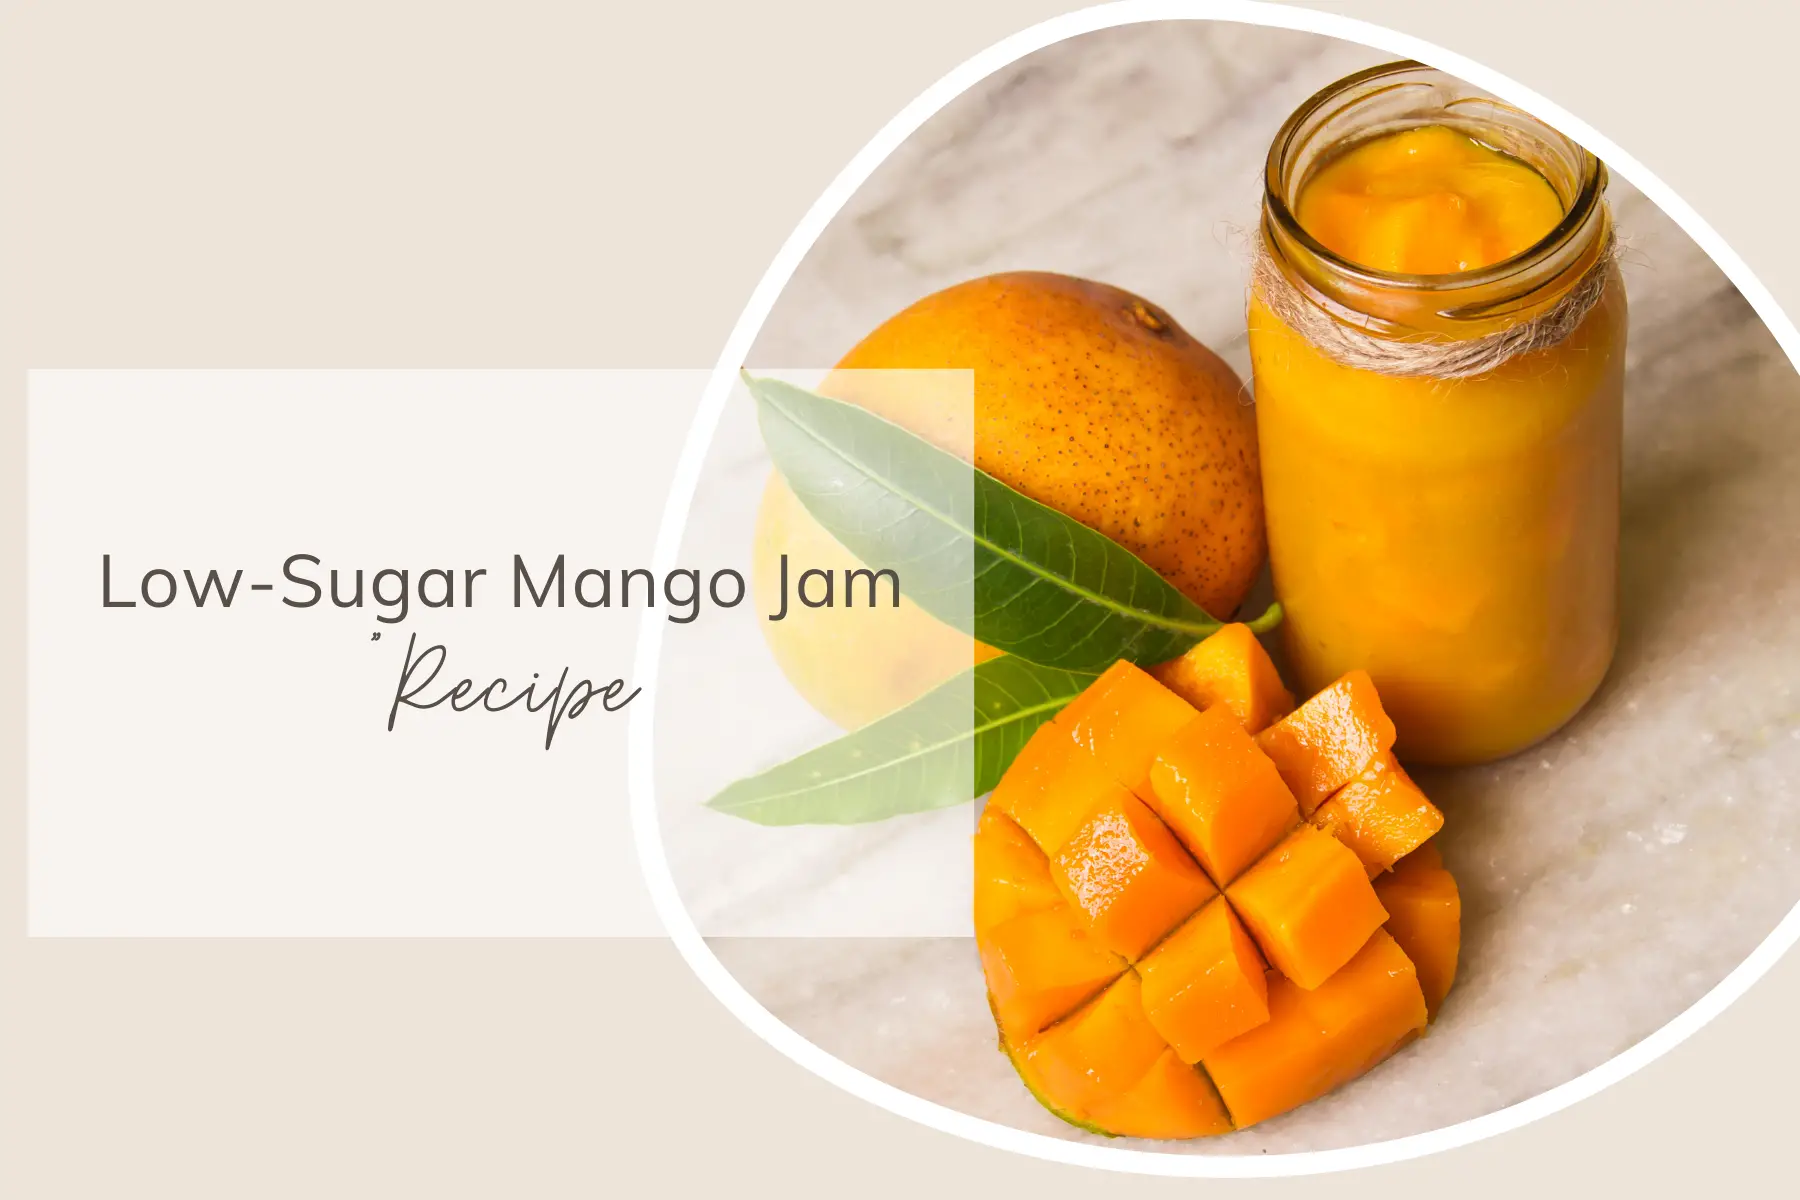 Low-Sugar Mango Jam Recipe